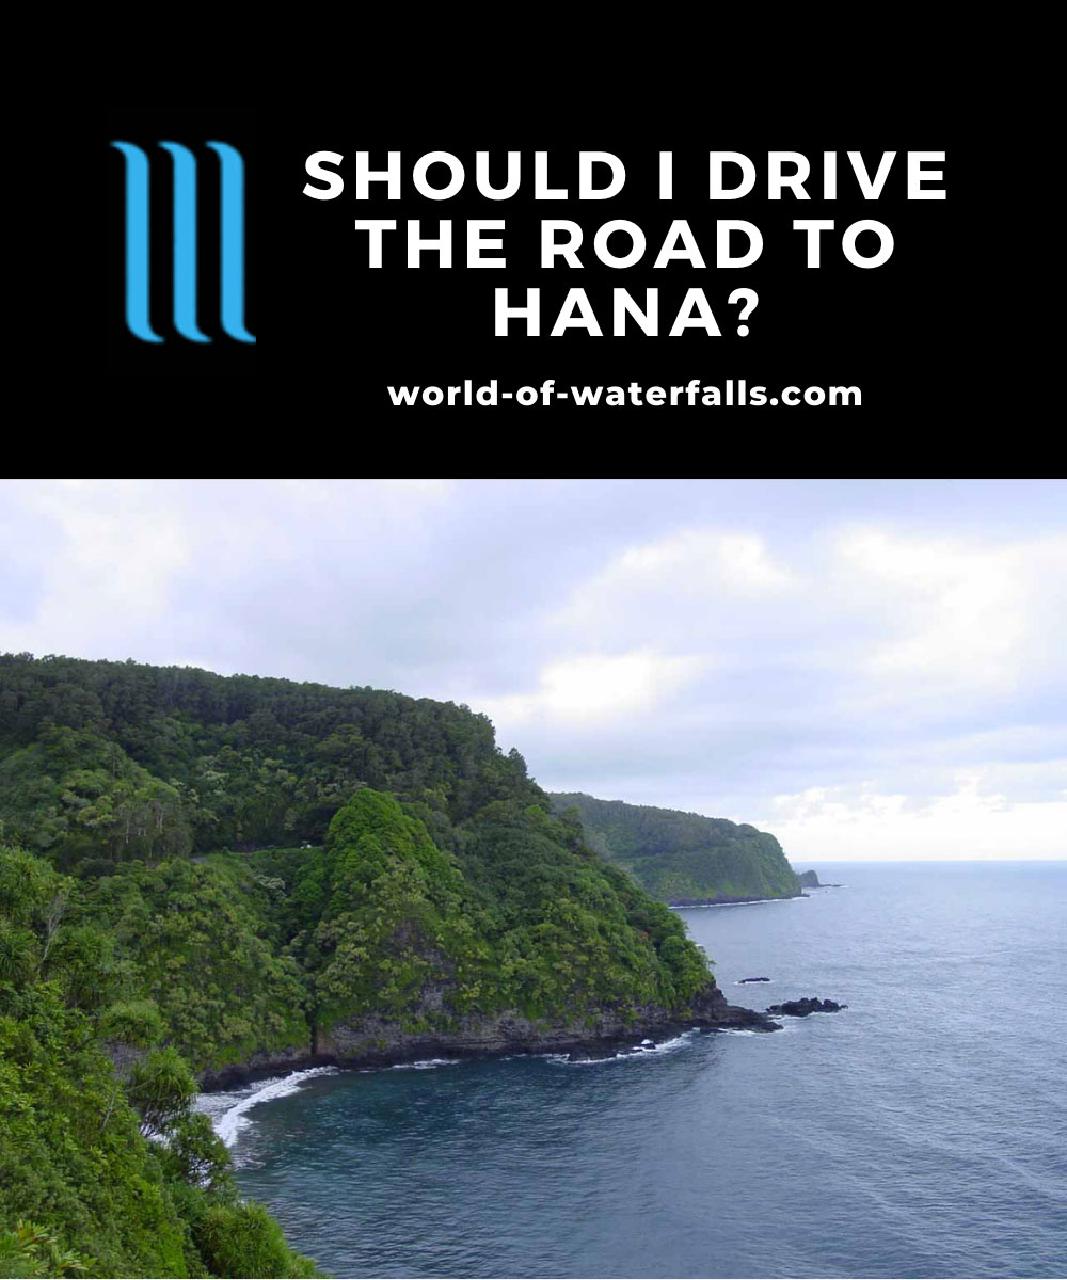 Should I Drive The Road To Hana?